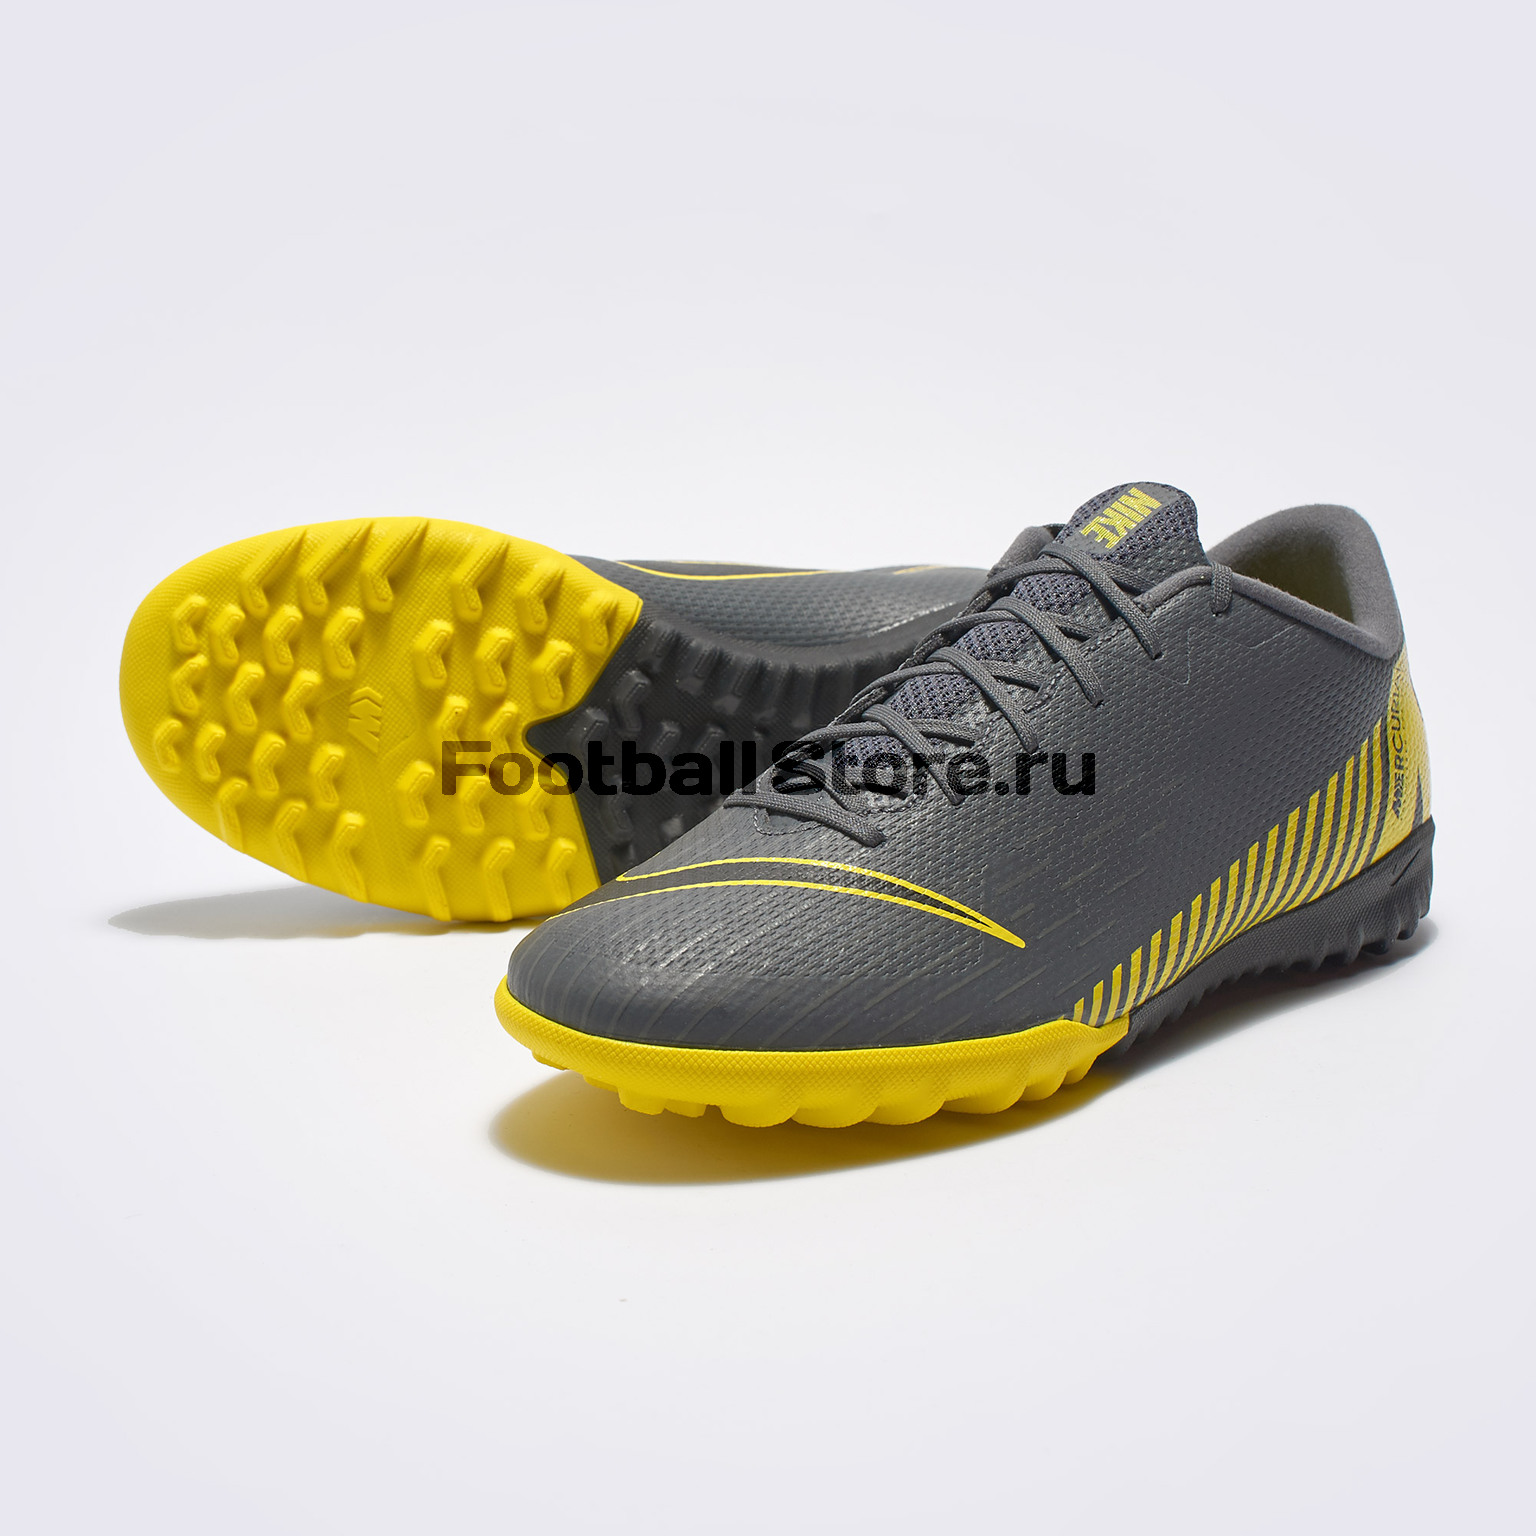 Шиповки Nike Vapor 12 Academy TF AH7384-070